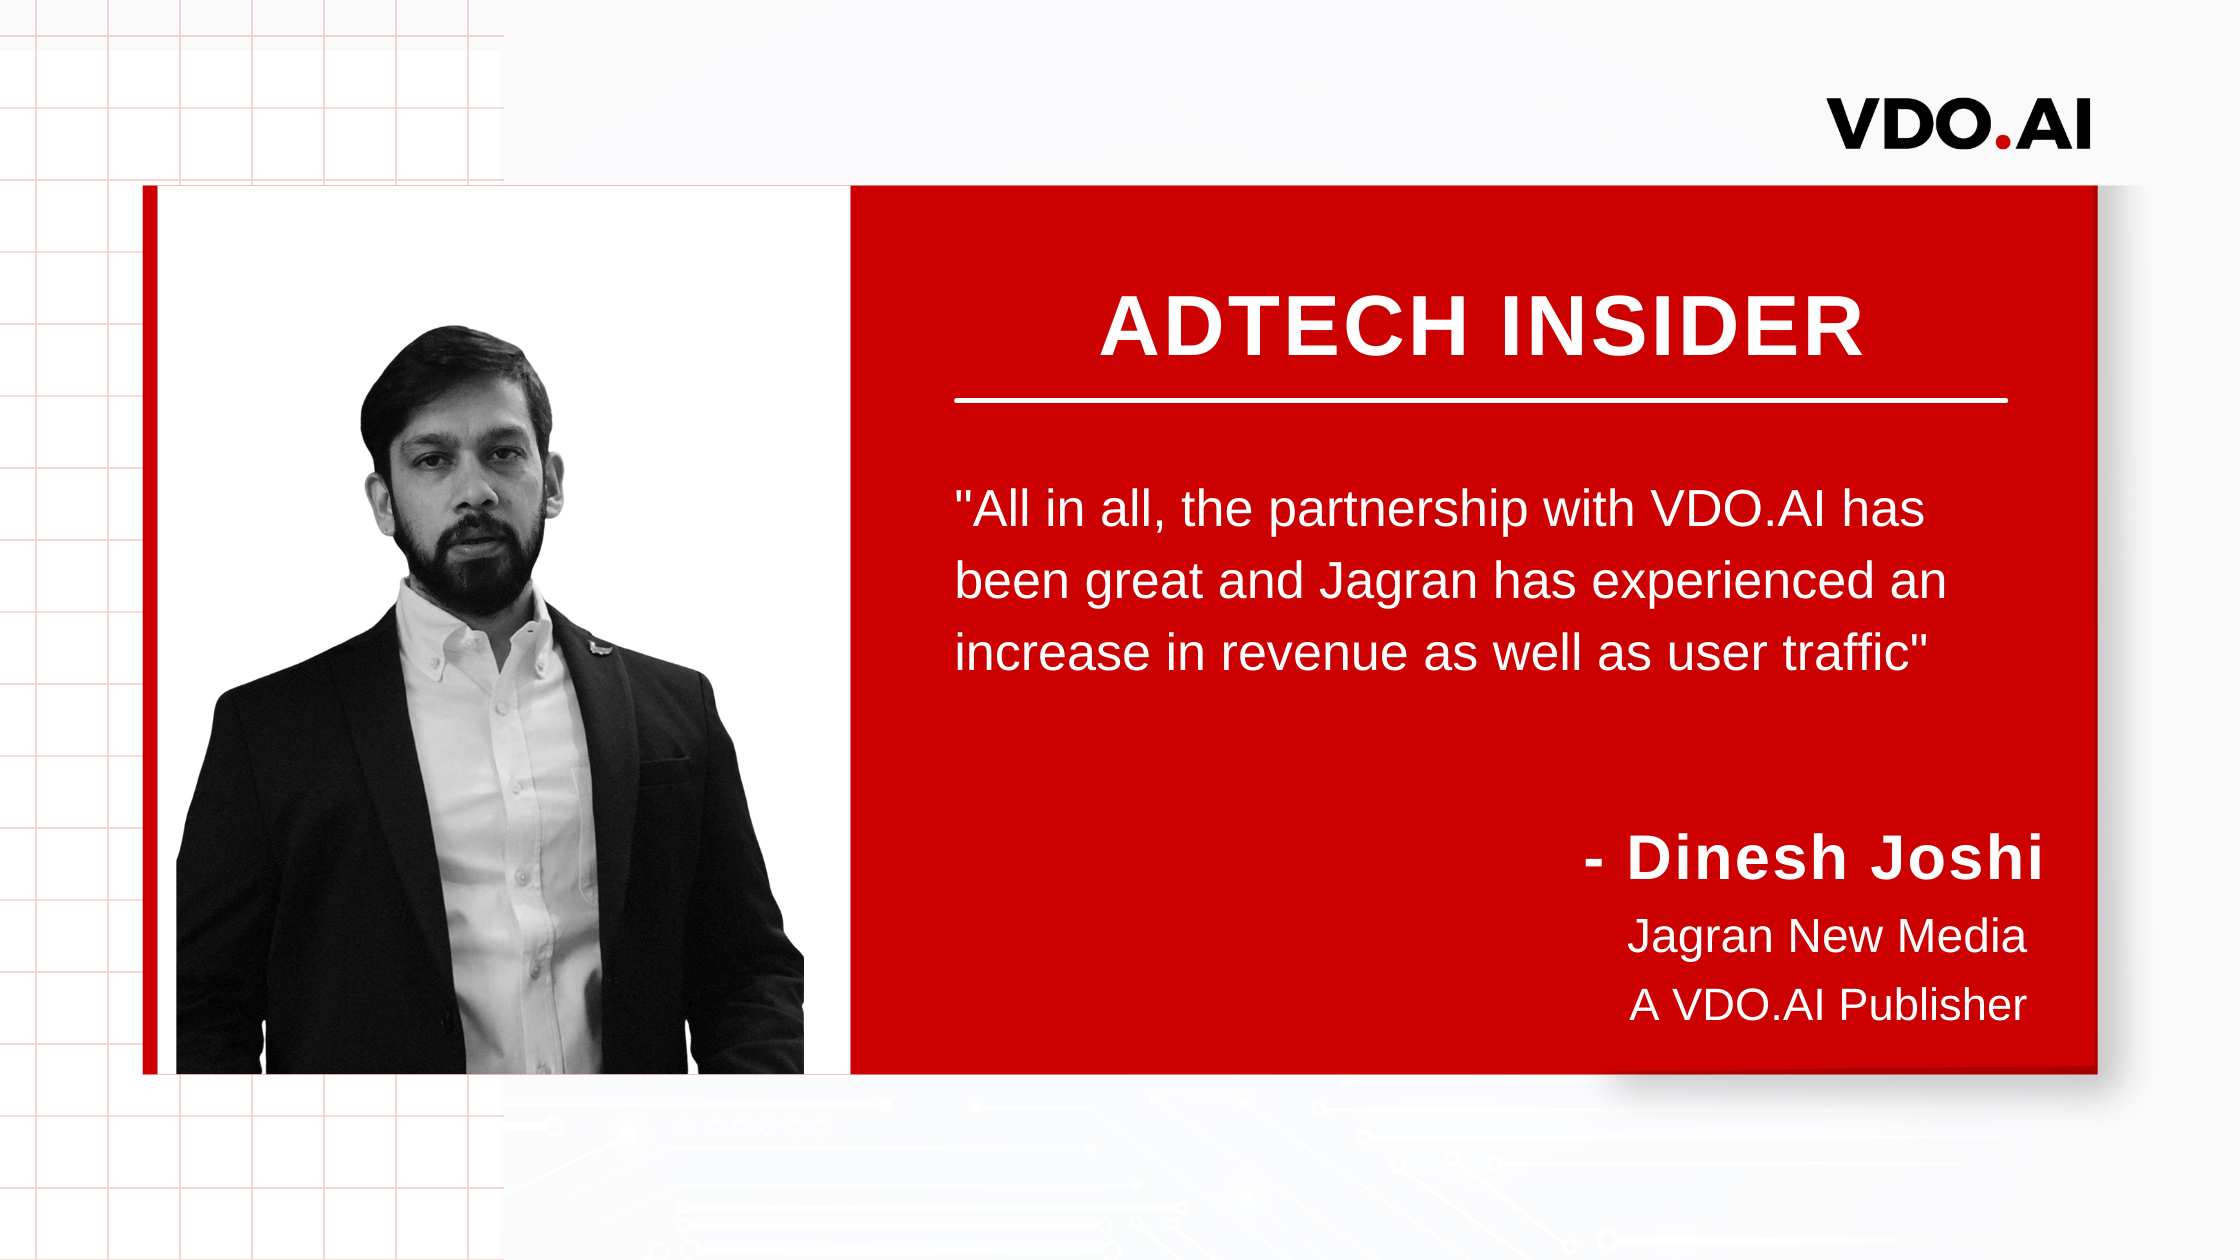 AdTech Insider with Dinesh Joshi from Jagran New Media